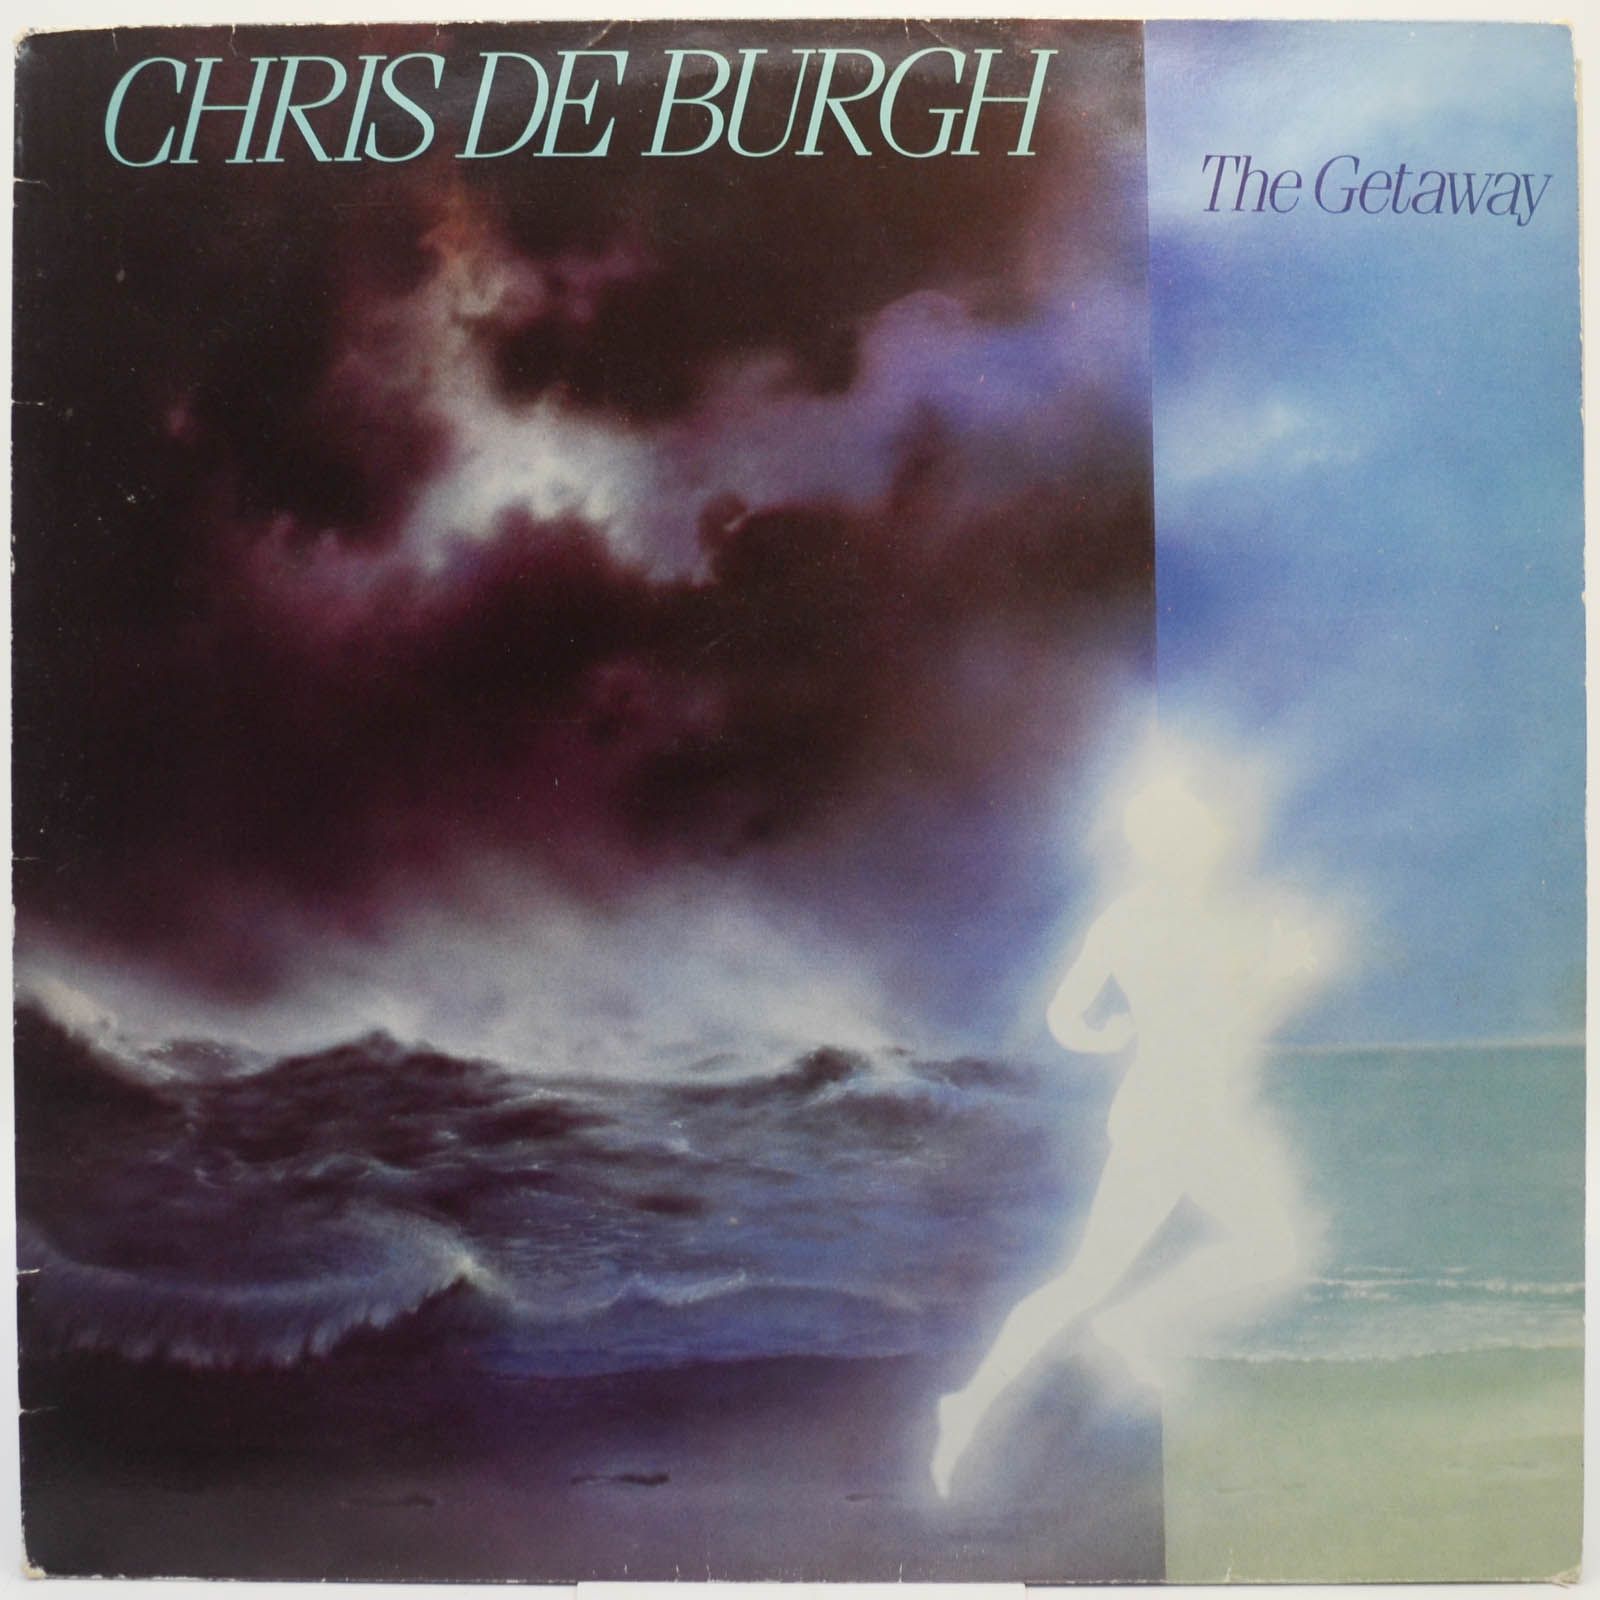 Chris de Burgh — The Getaway, 1982